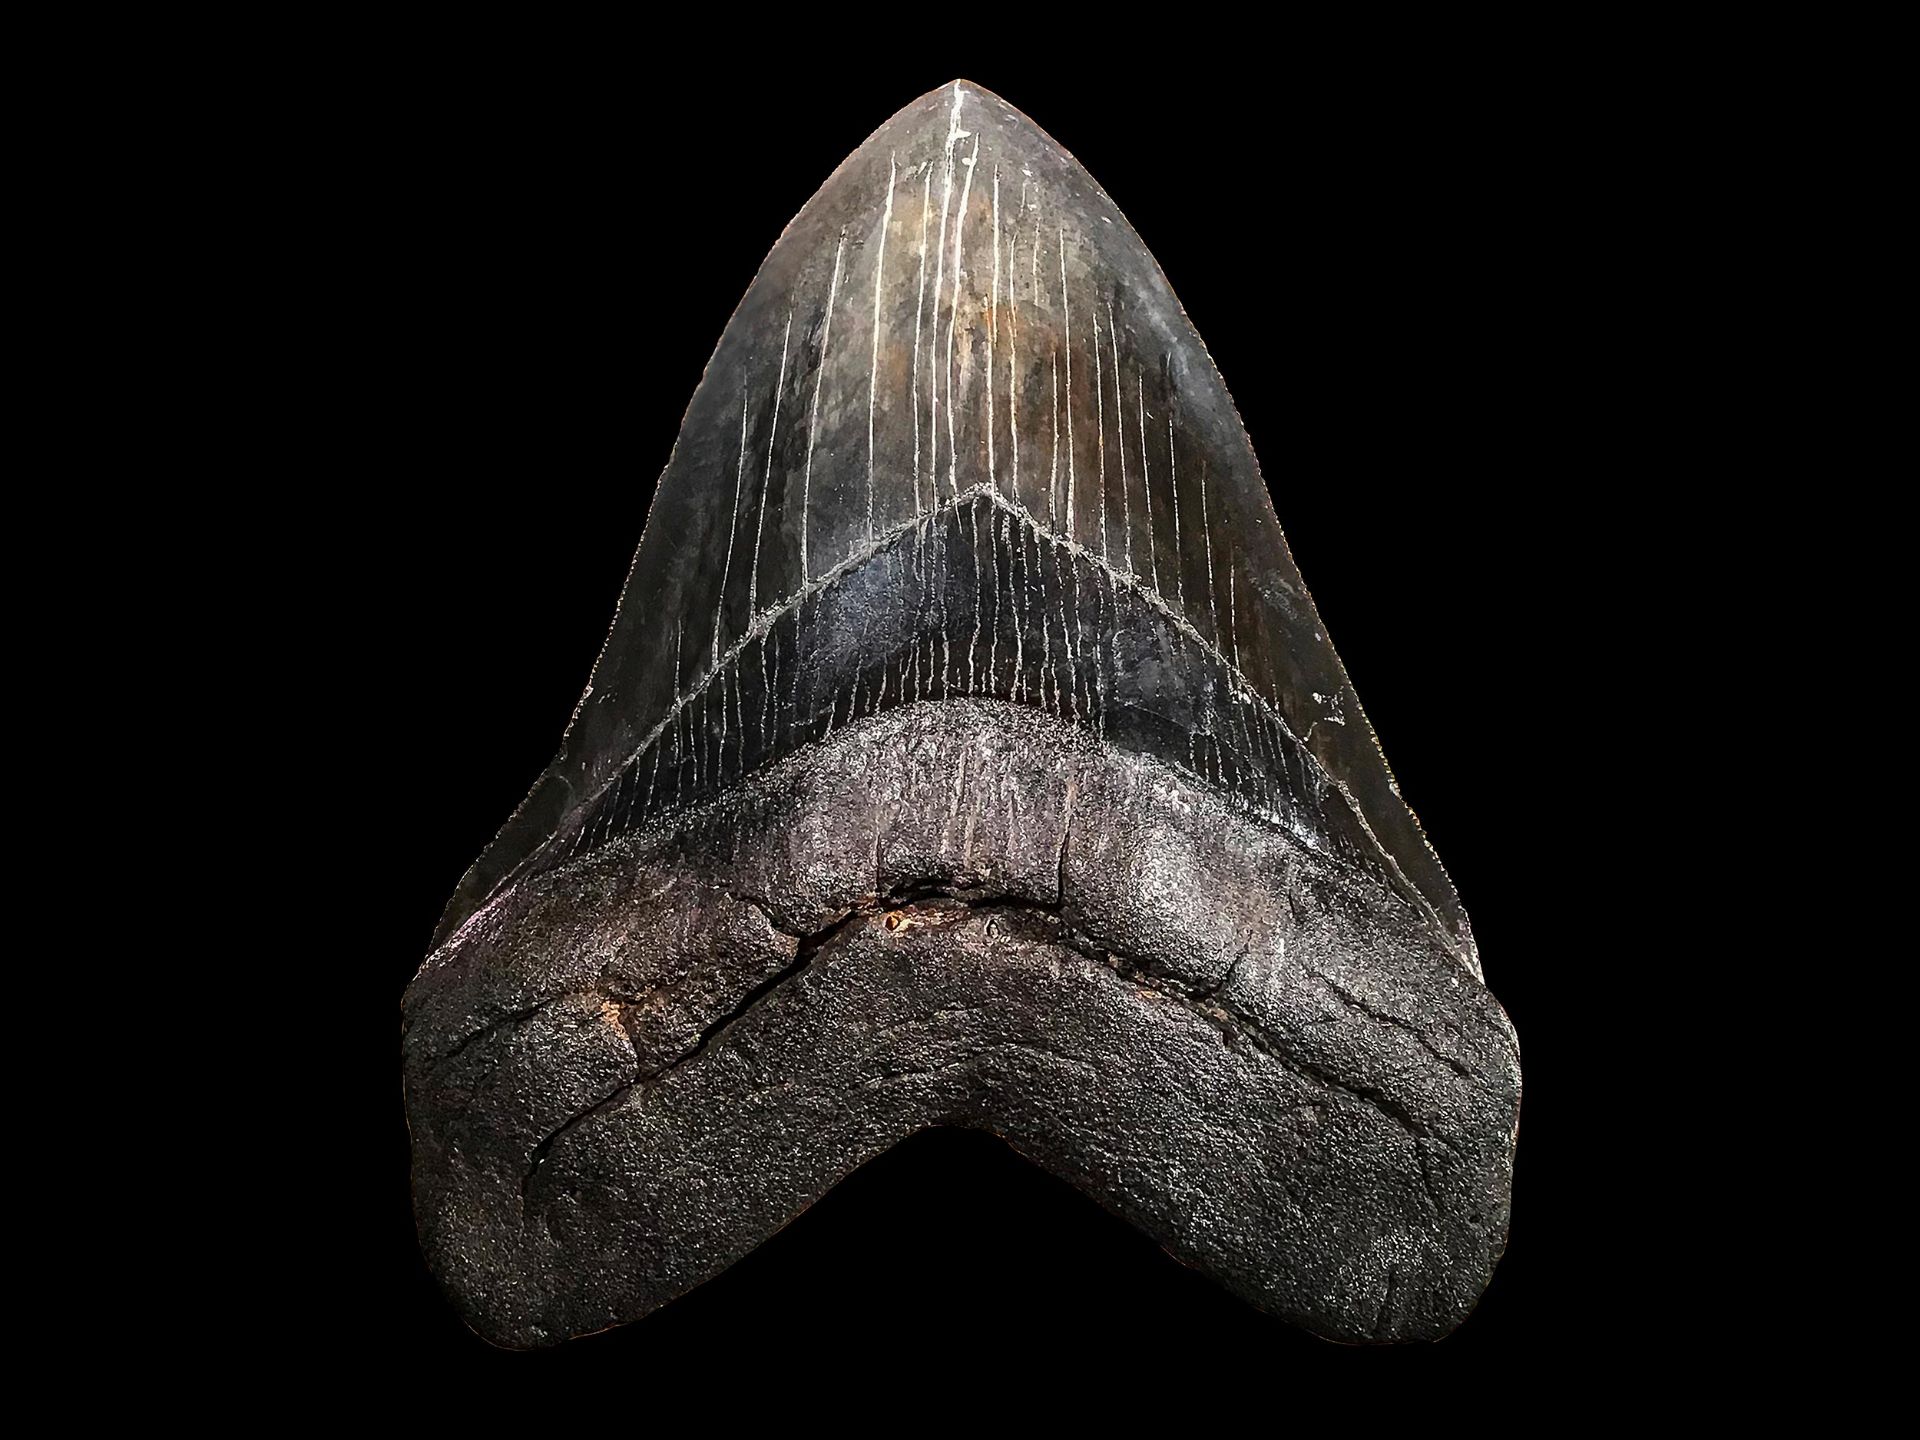 Zahn eines Megalodon-Hai (Carcharocles Megalodon)